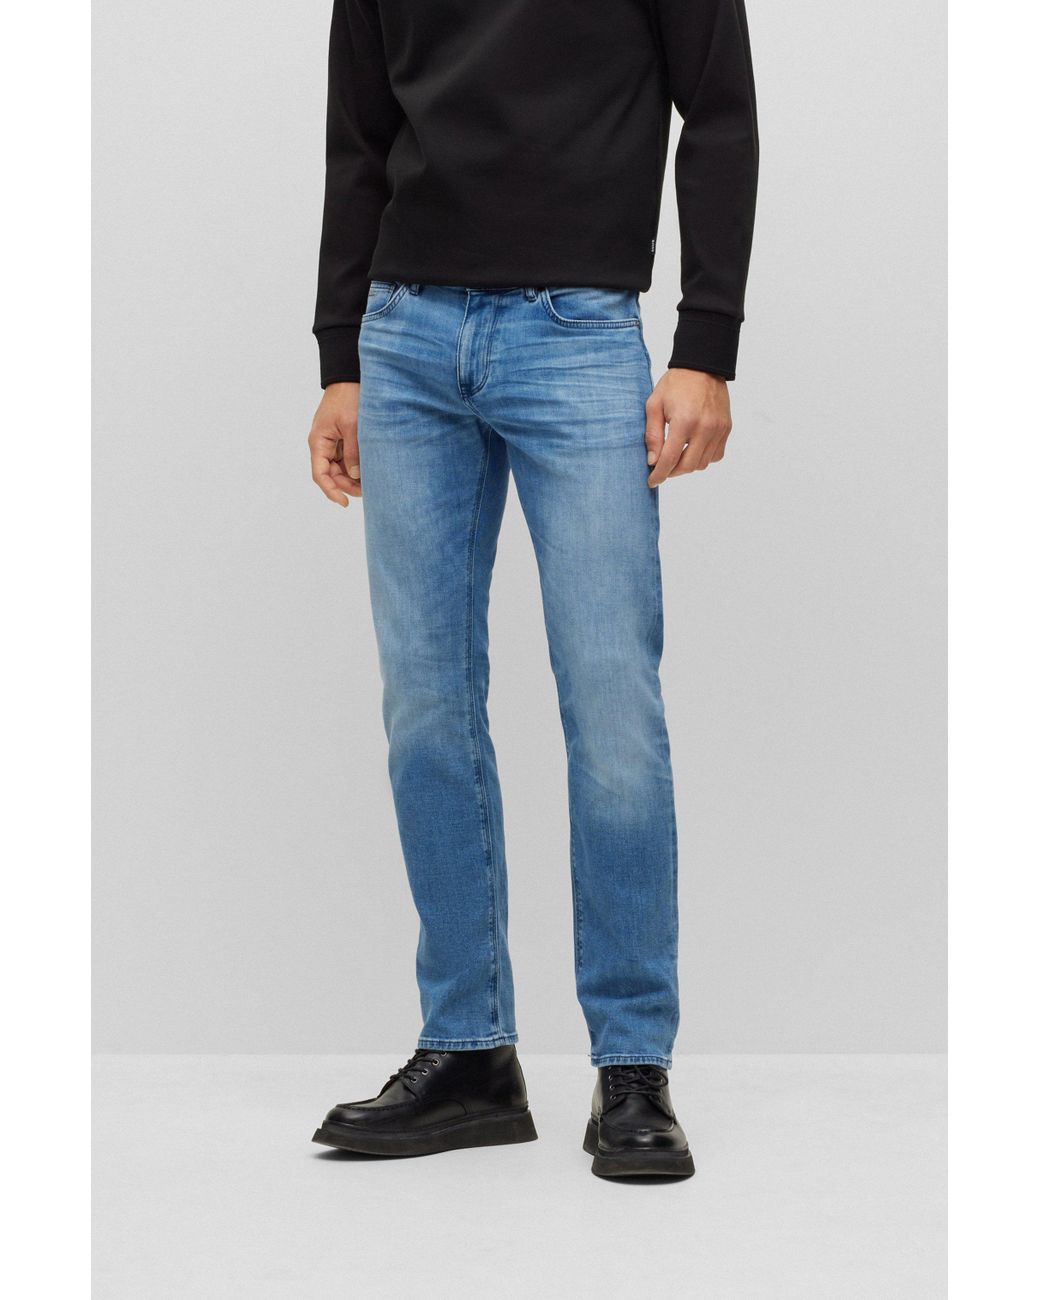 BOSS by HUGO BOSS Regular-fit Jeans In Blue Italian Cashmere-touch Denim  for Men | Lyst